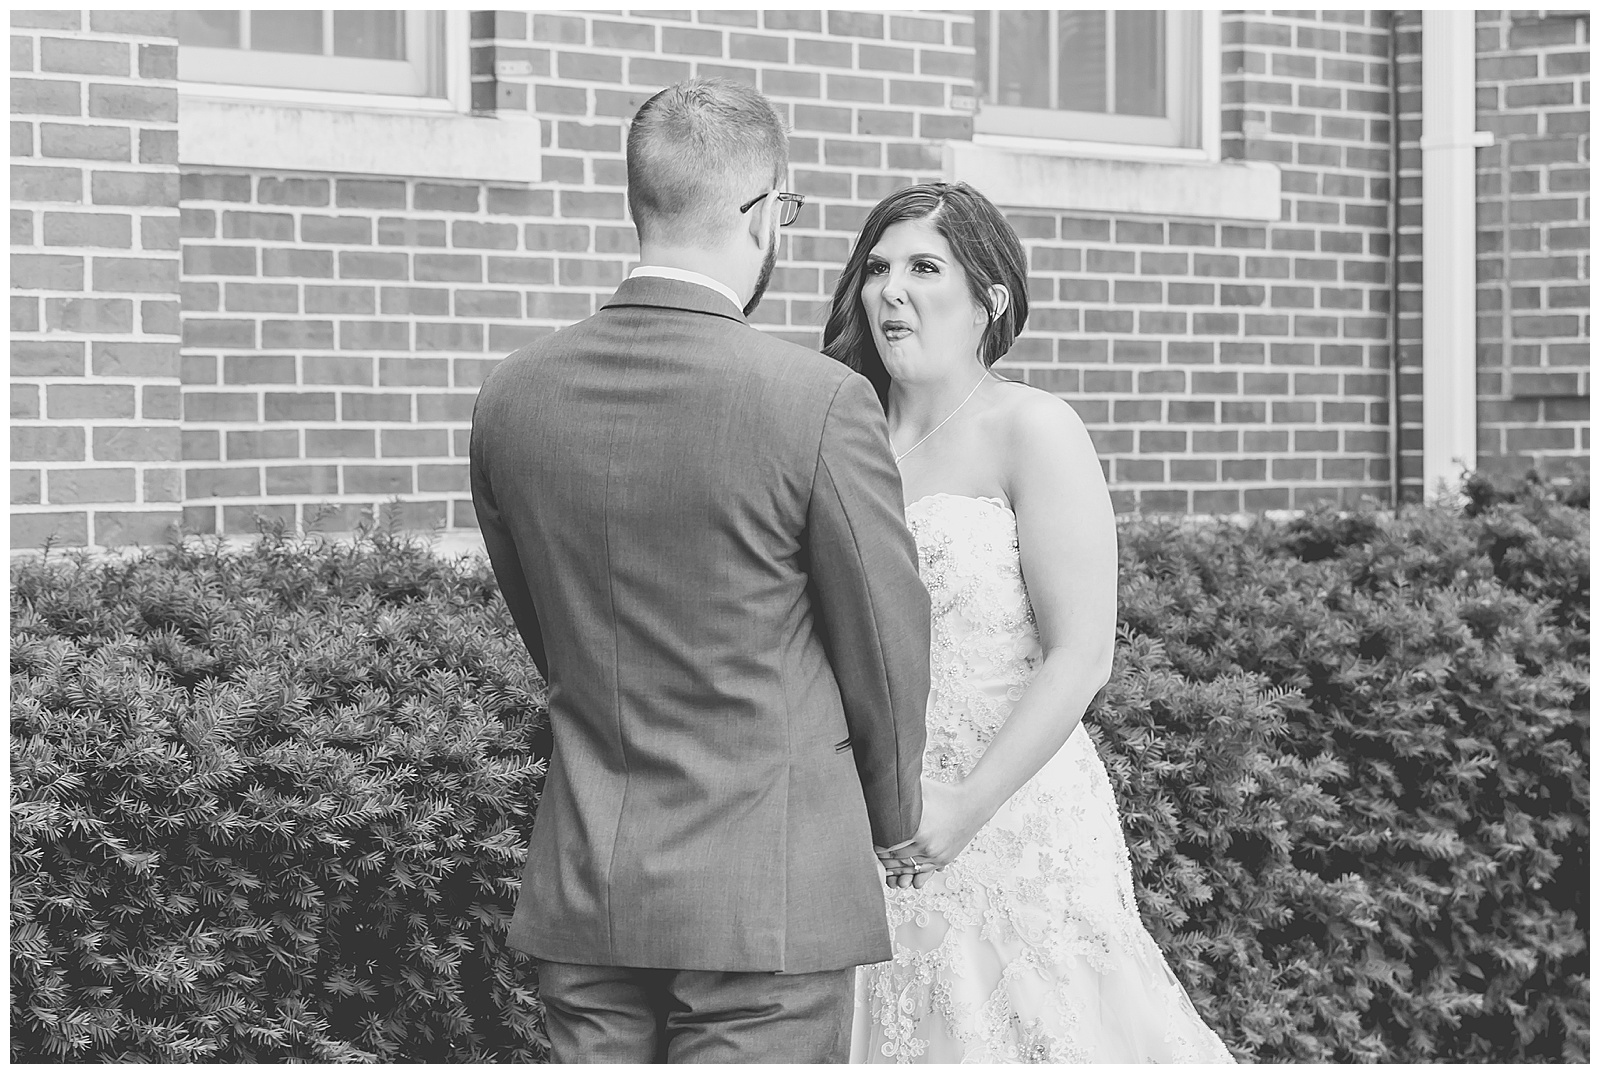 Wedding photography and videography at the KU Alumni Association Adams Alumni Center by Kansas City wedding photographers Wisdom-Watson Weddings.